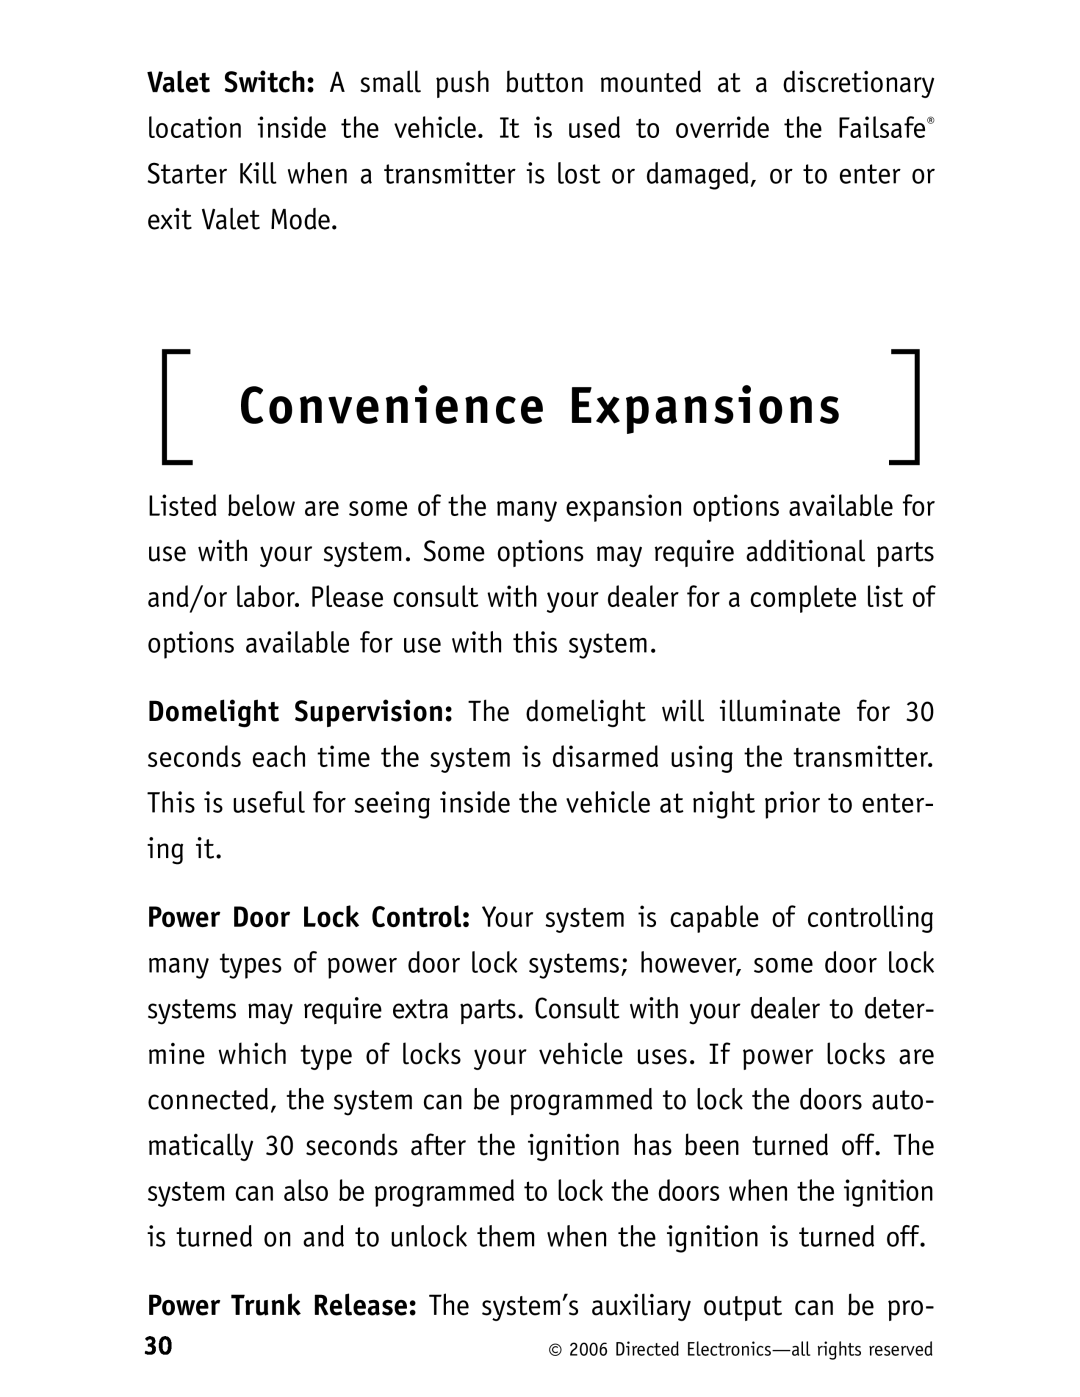 Viper 5500 manual Convenience Expansions 